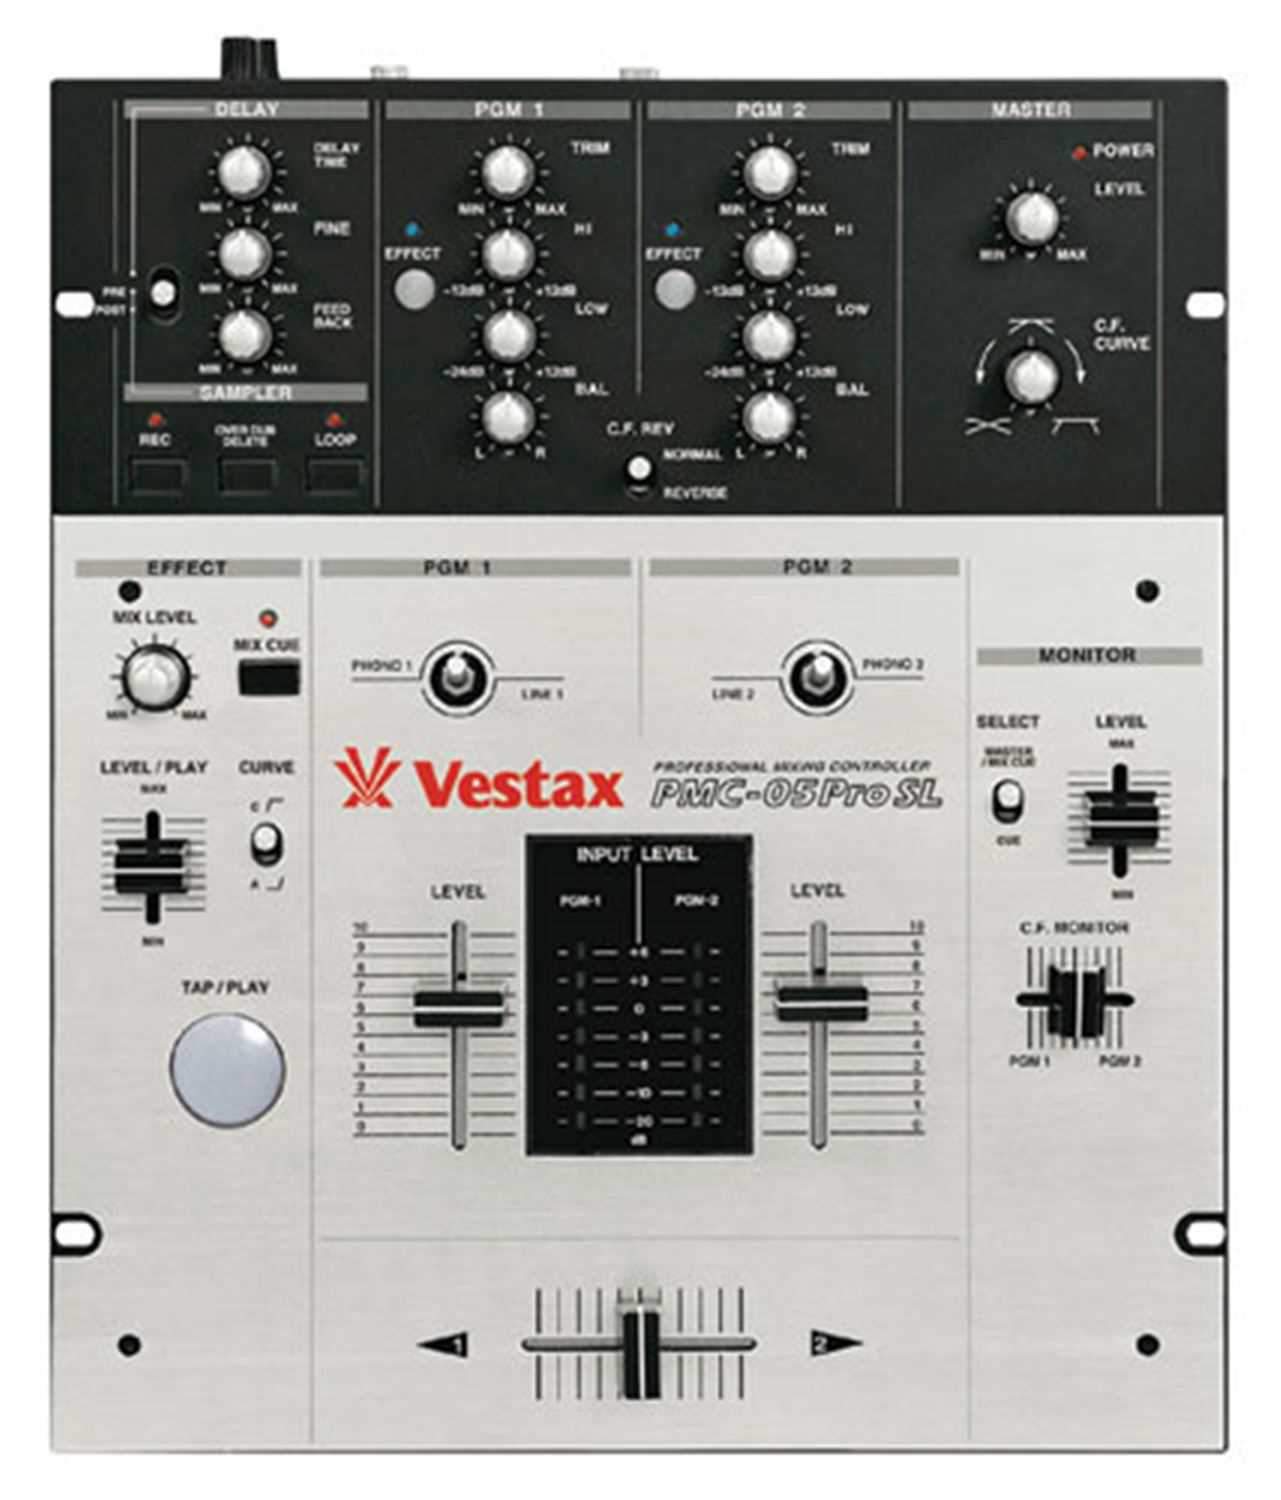 Vestax DJミキサー PMC-05Pro付属品AC電源ケーブルのみ